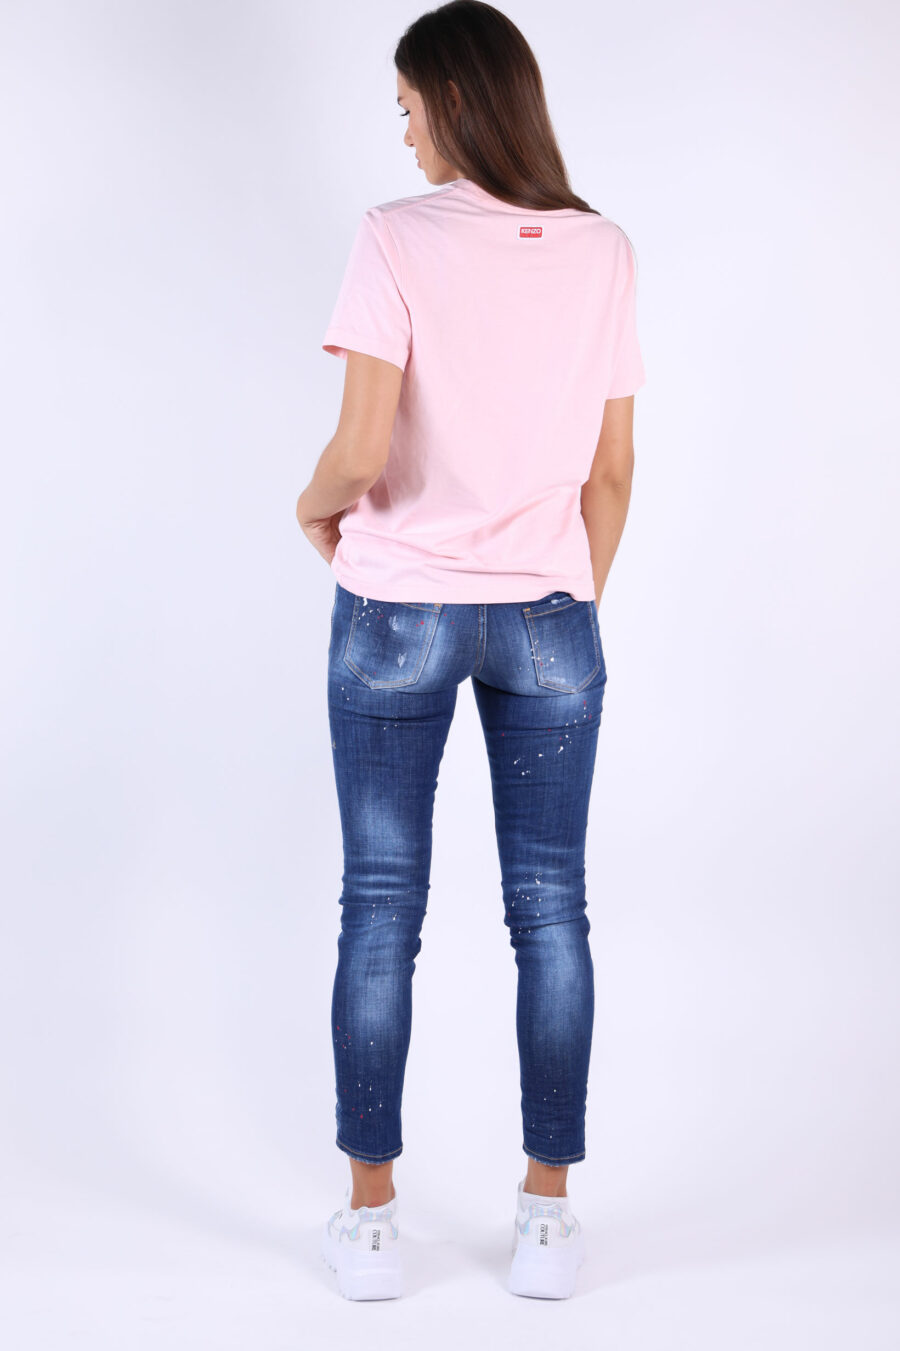 Pink T-shirt with "boke flower" maxilogo - 361223054662201895